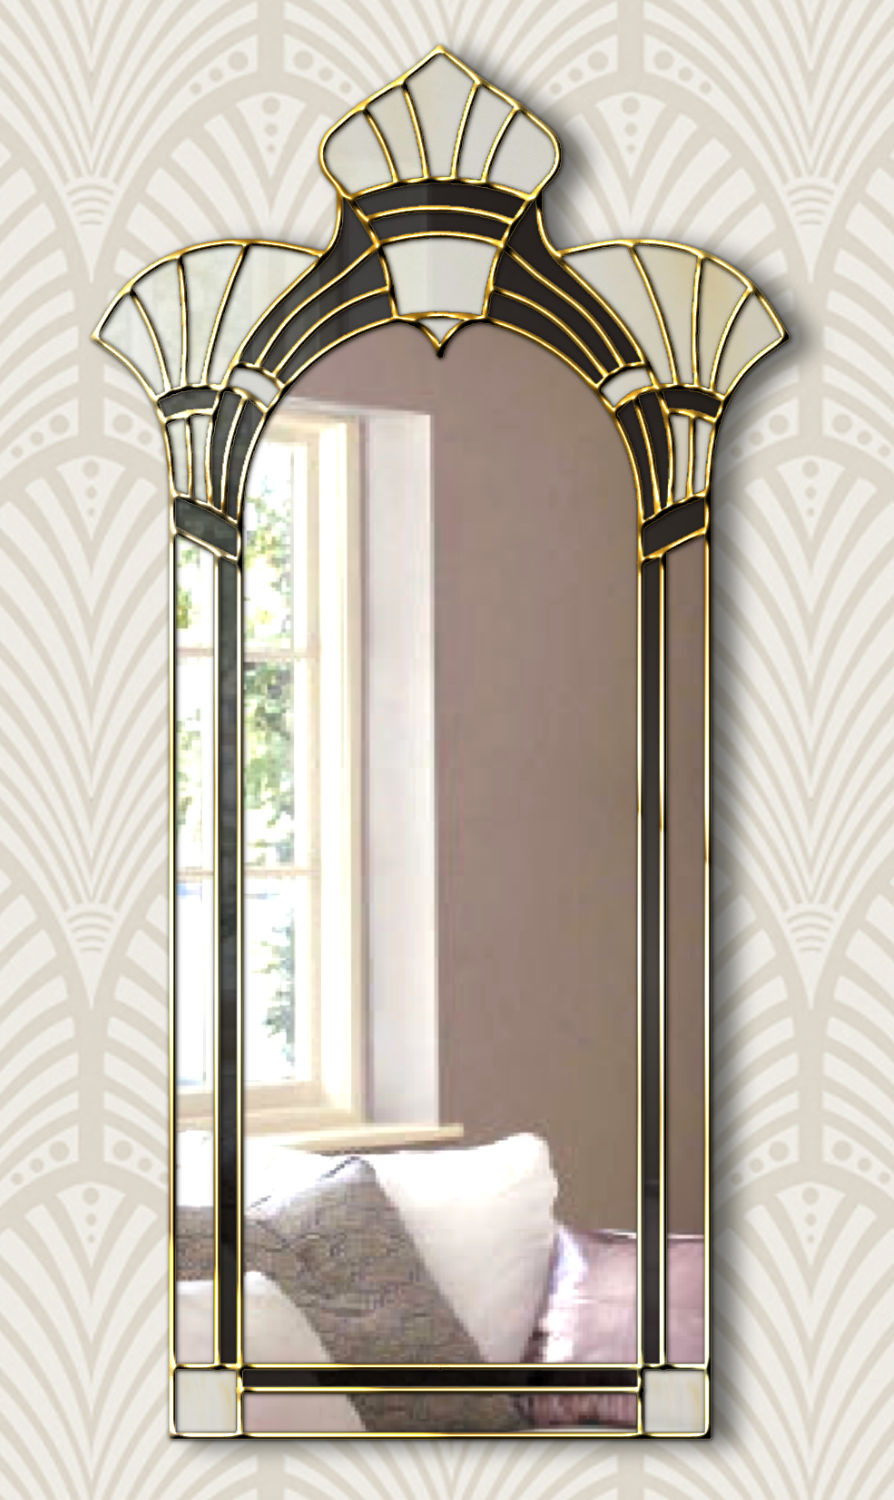 Art Deco Fan Mirrors - Photos & Ideas | Houzz